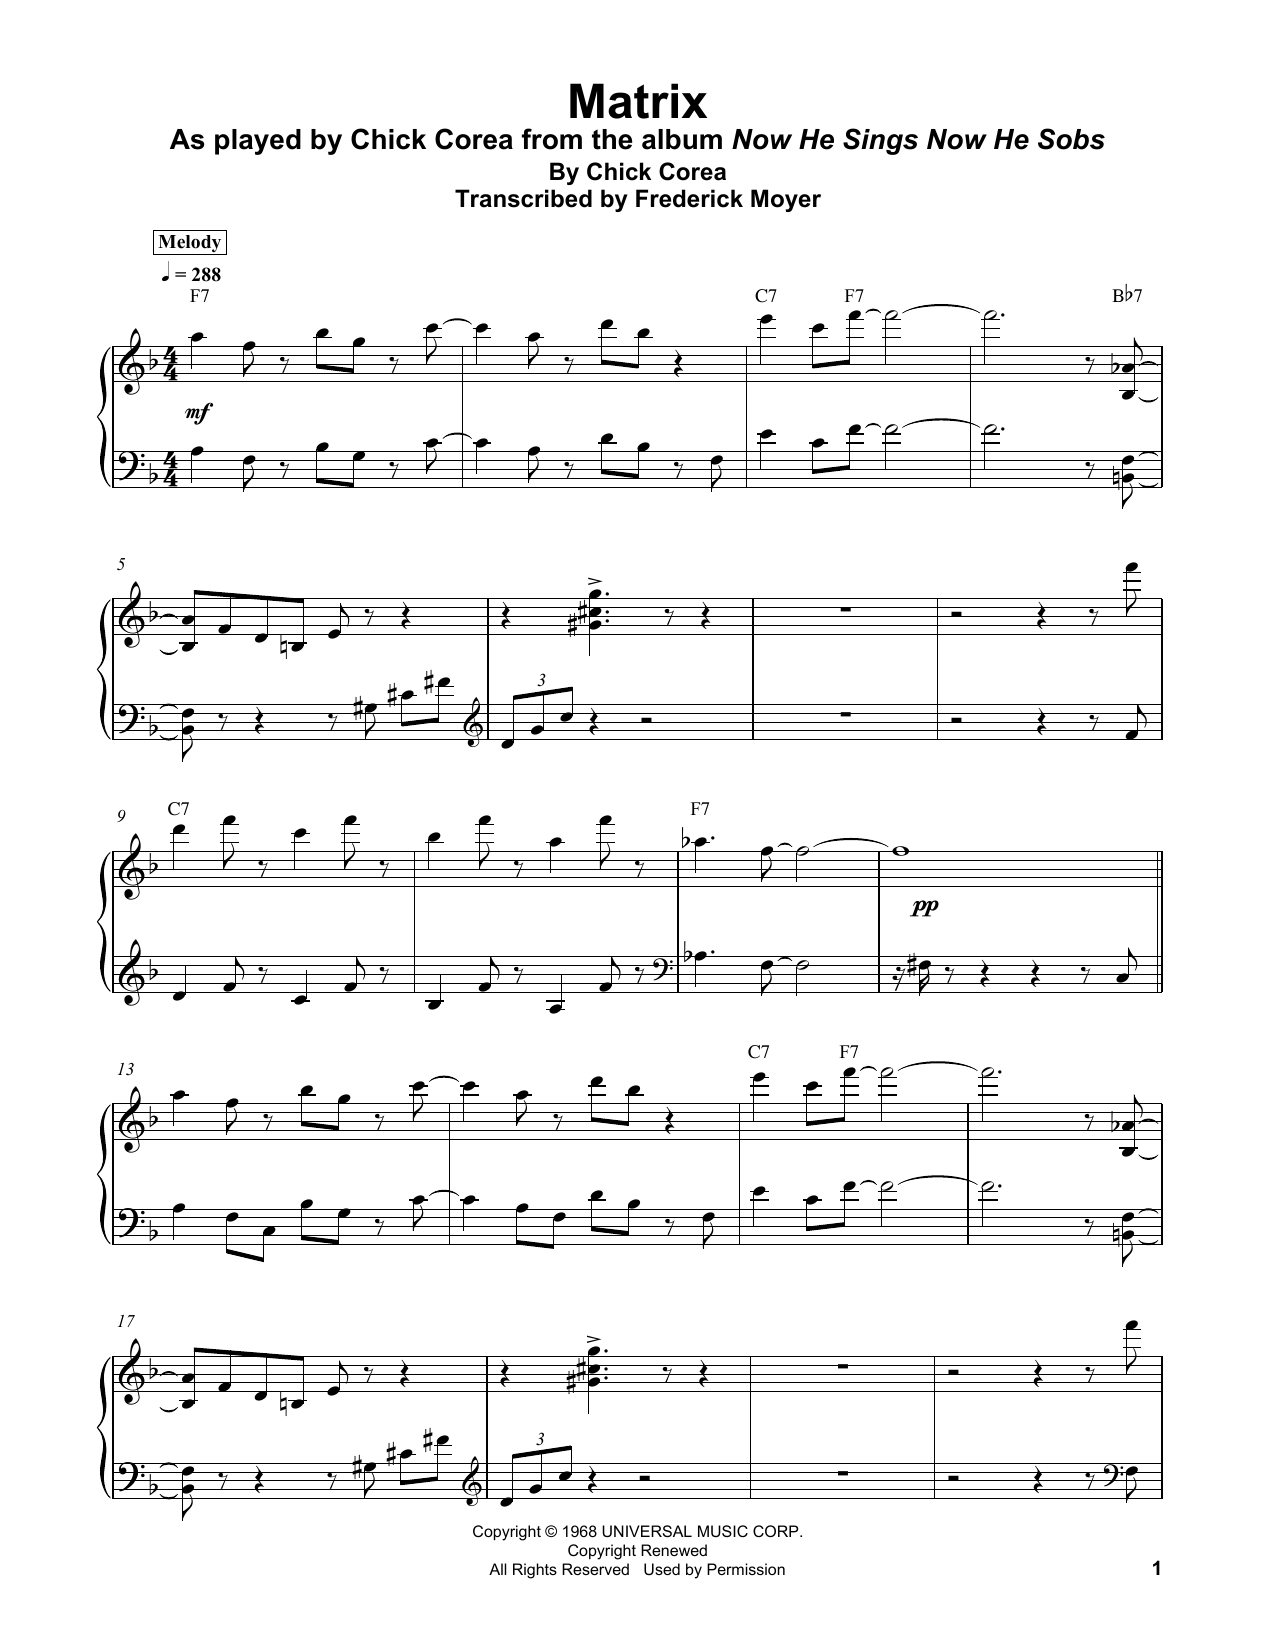 Chick Corea Matrix Sheet Music Notes & Chords for Piano Transcription - Download or Print PDF